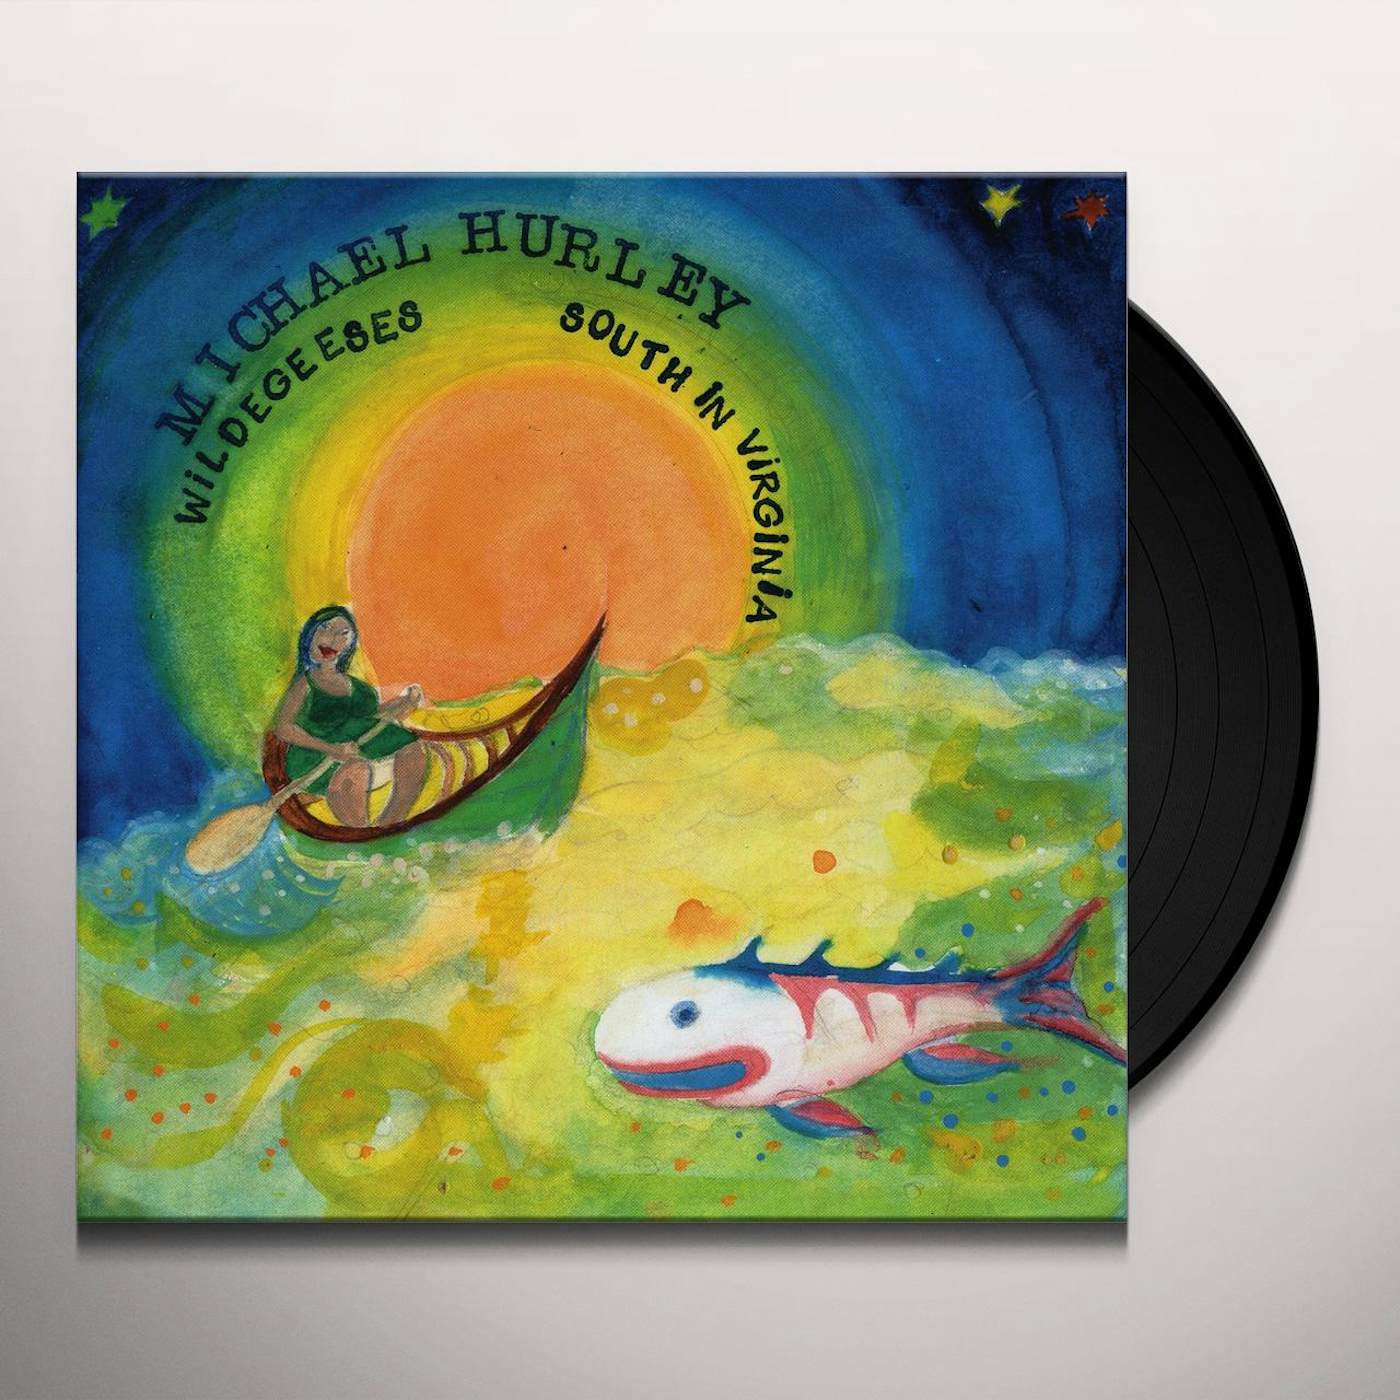 Michael Hurley WILDEGEESES / SOUTH IN VIRGINIA Vinyl Record